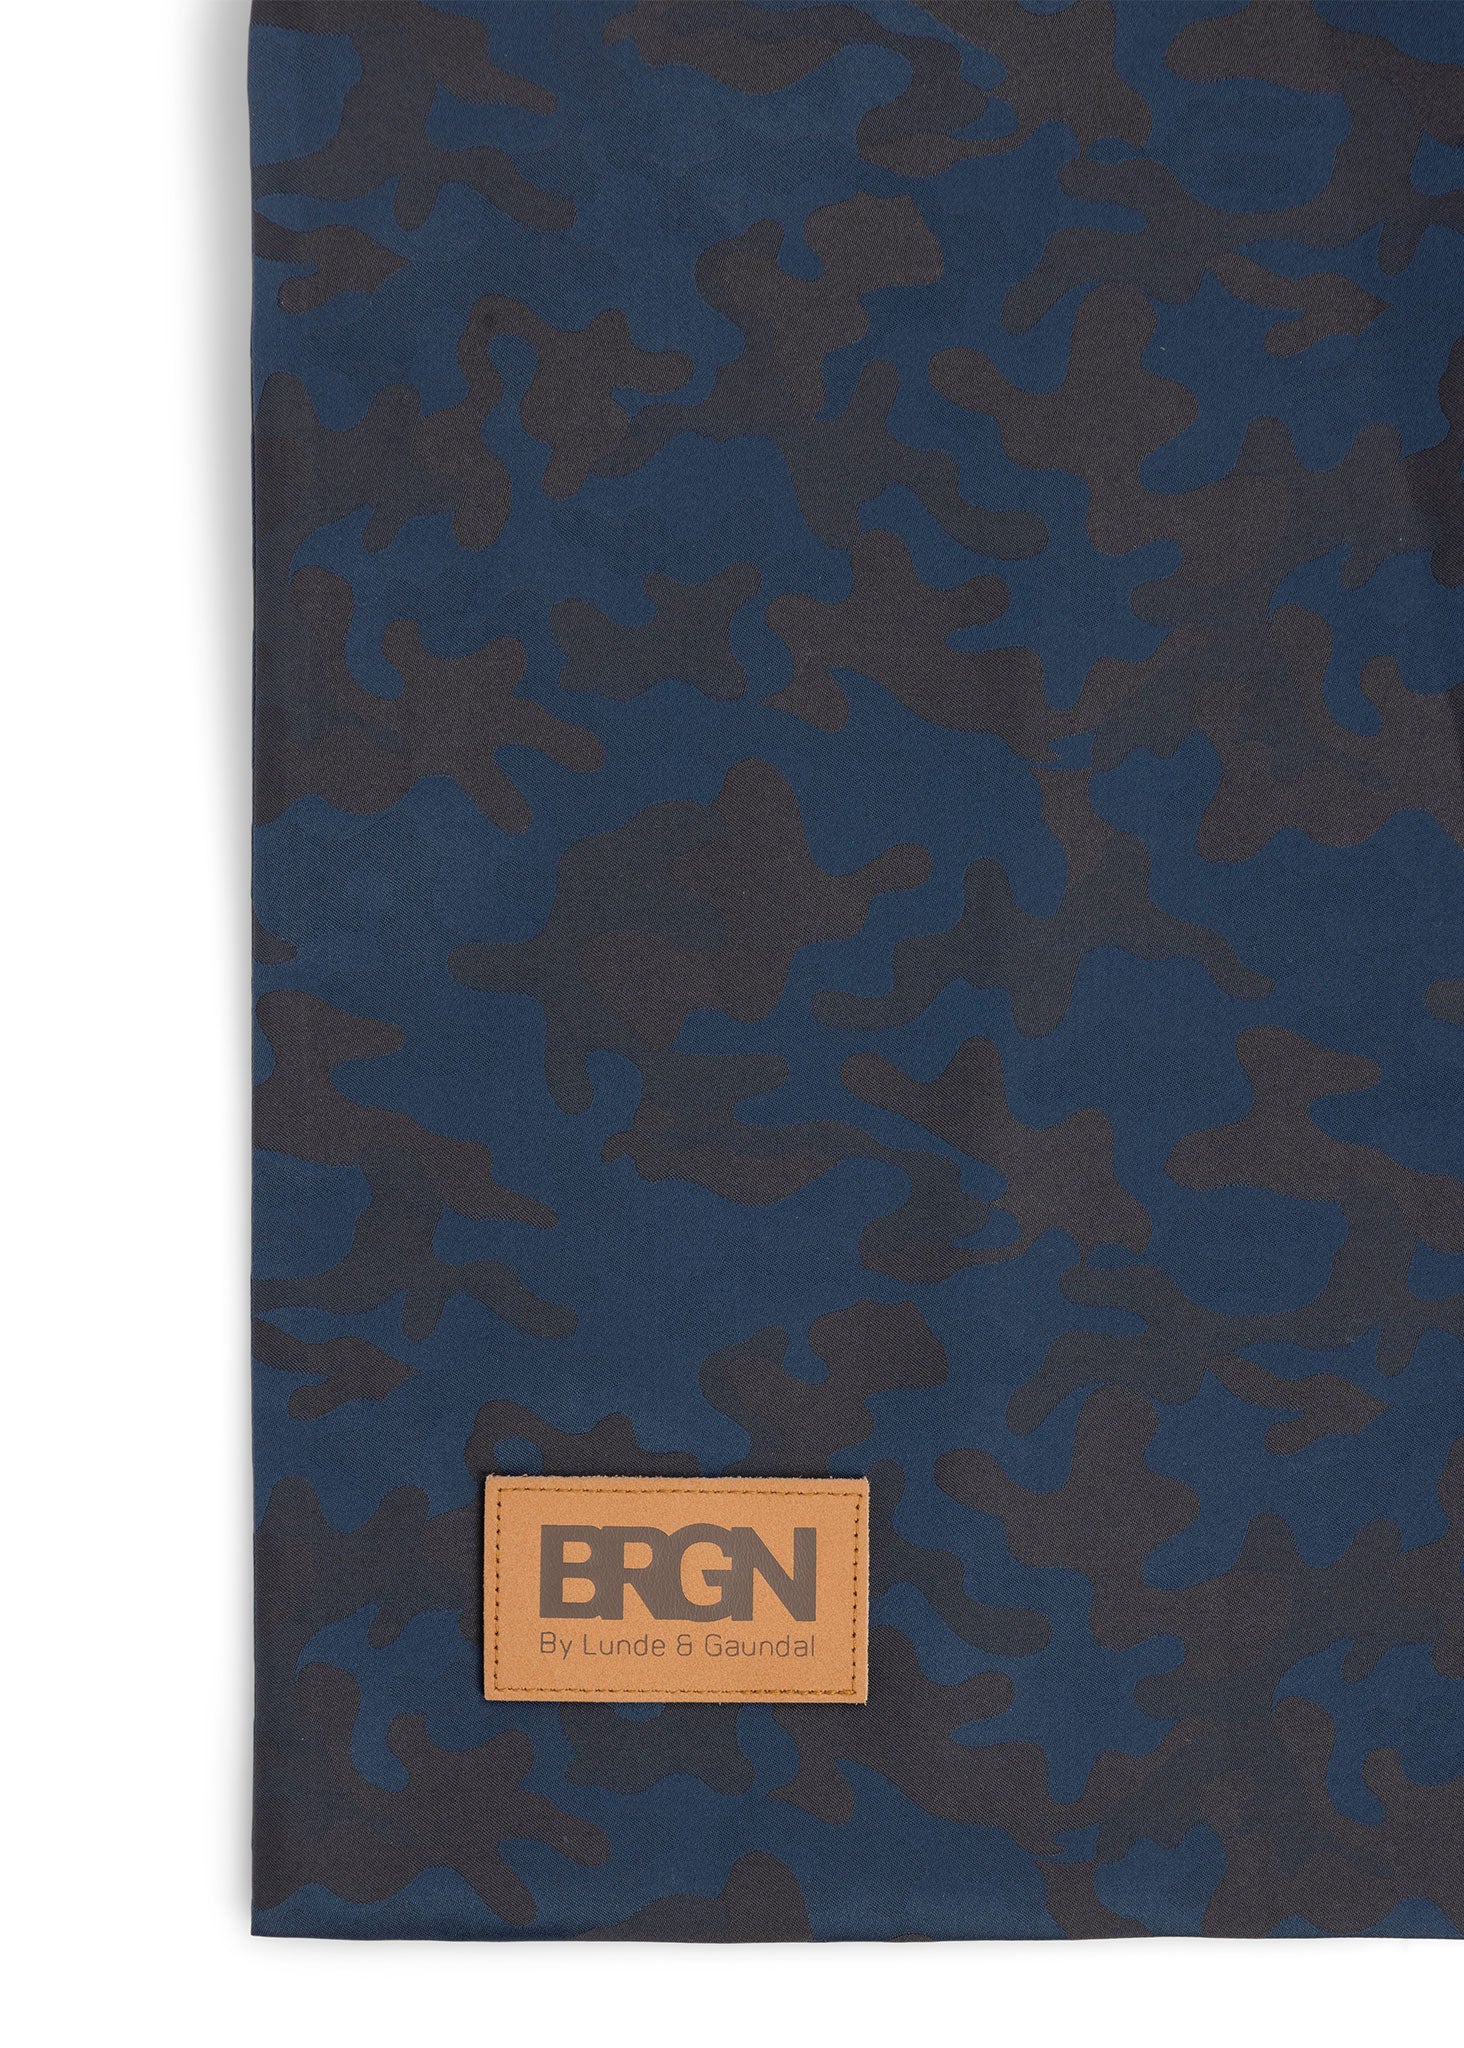 BRGN Tote Bag Marketing Material 978 Blue Jaquard